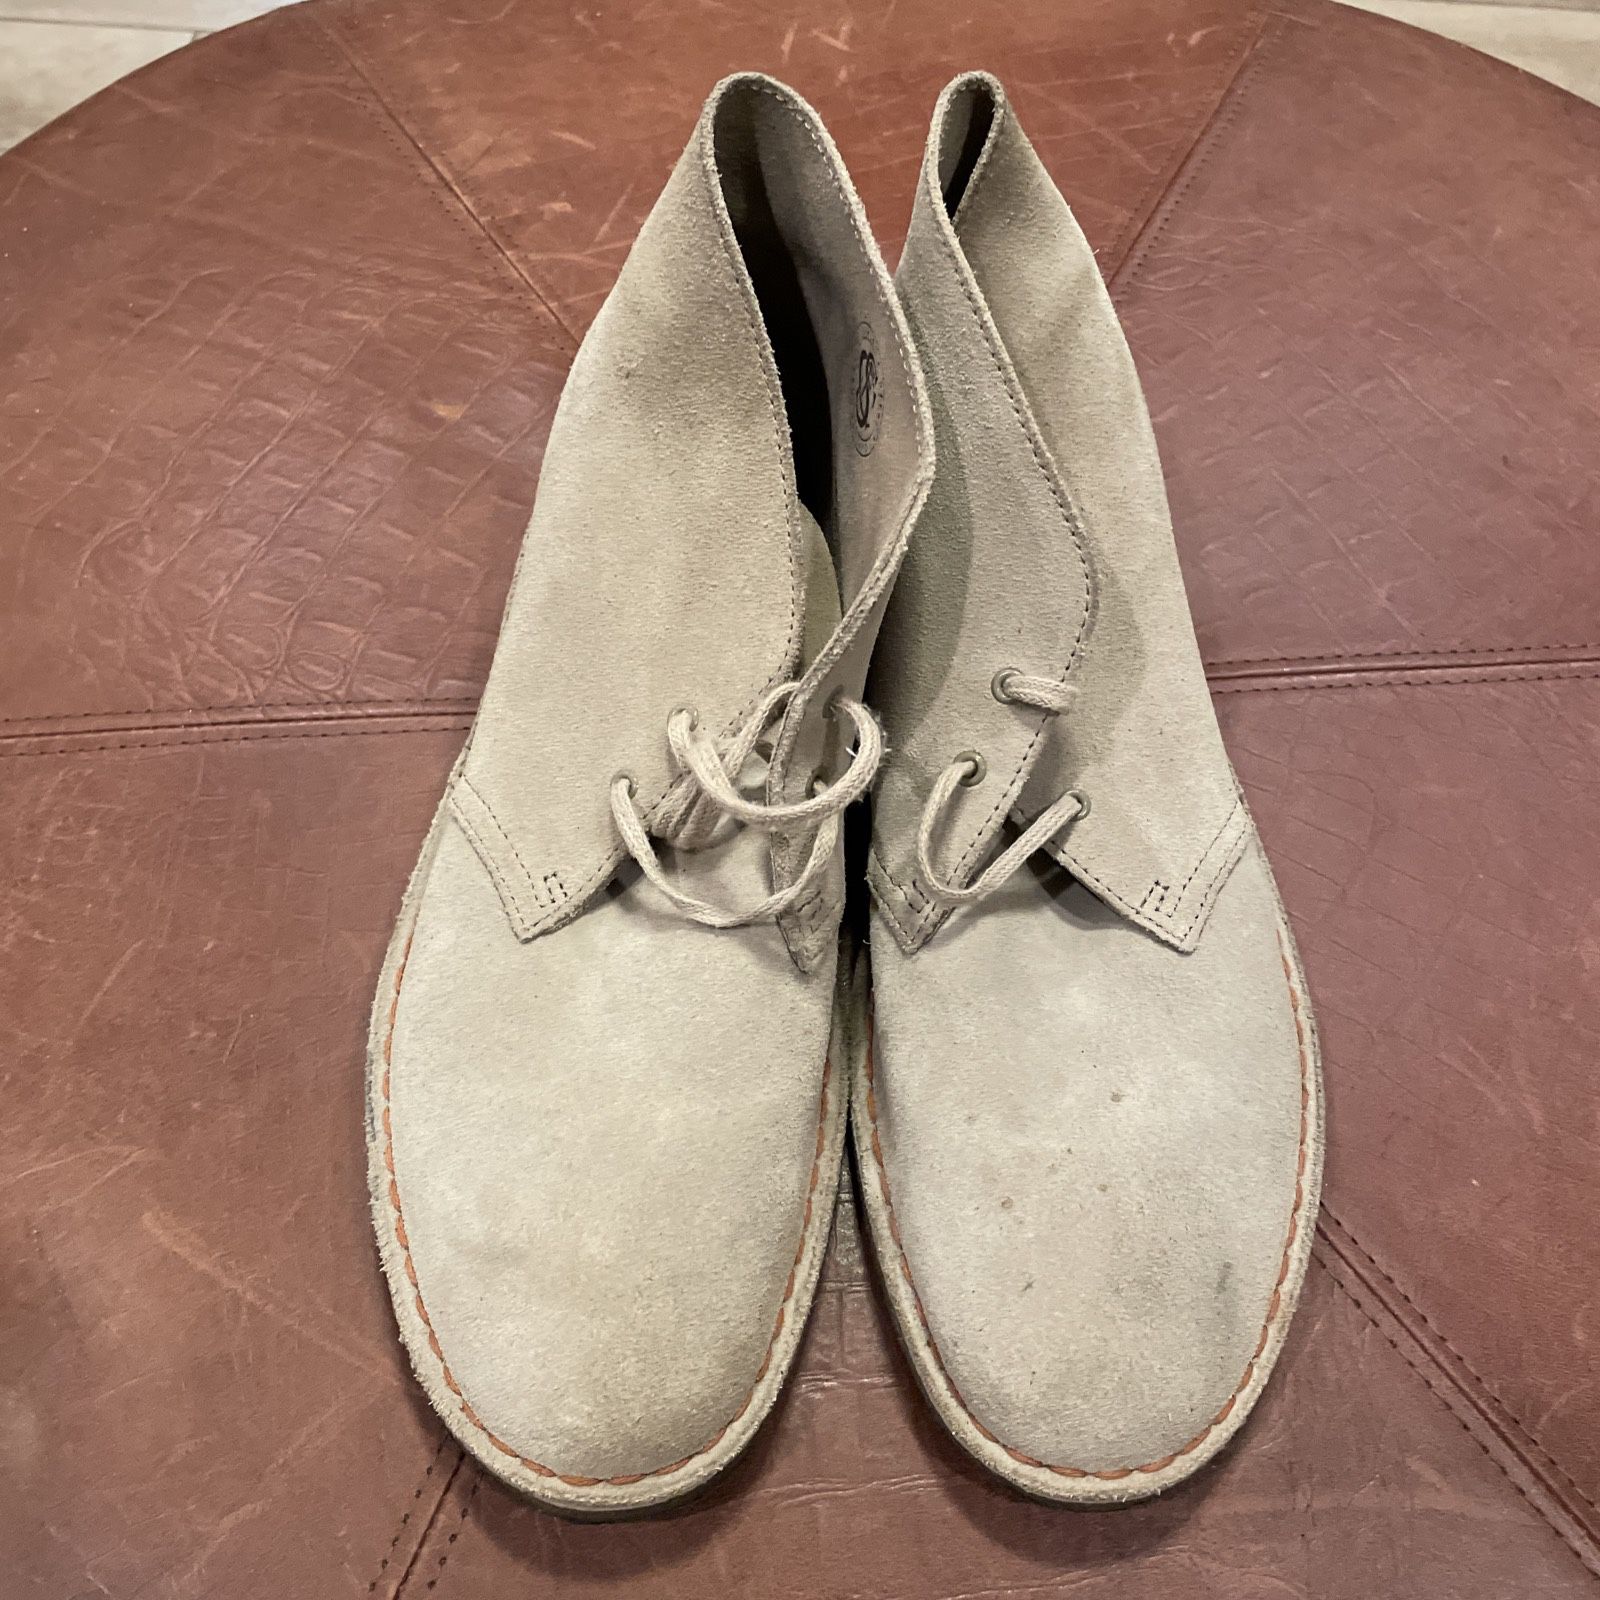 Clarks Originals X Charles Stead Desert Ankle Boot Suede Size 9.5 M